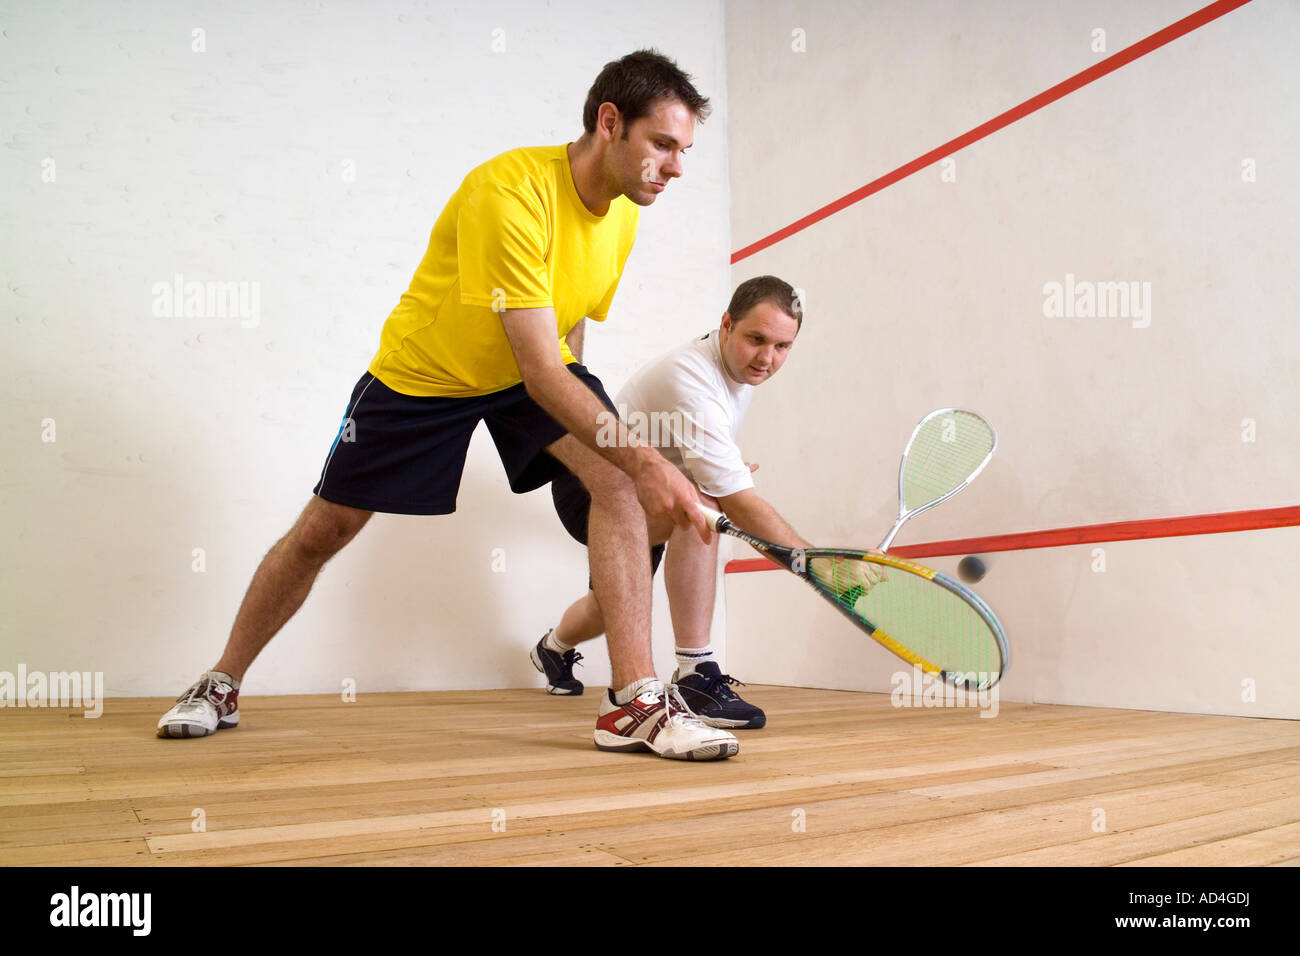 Two men playing squash Stock Photo